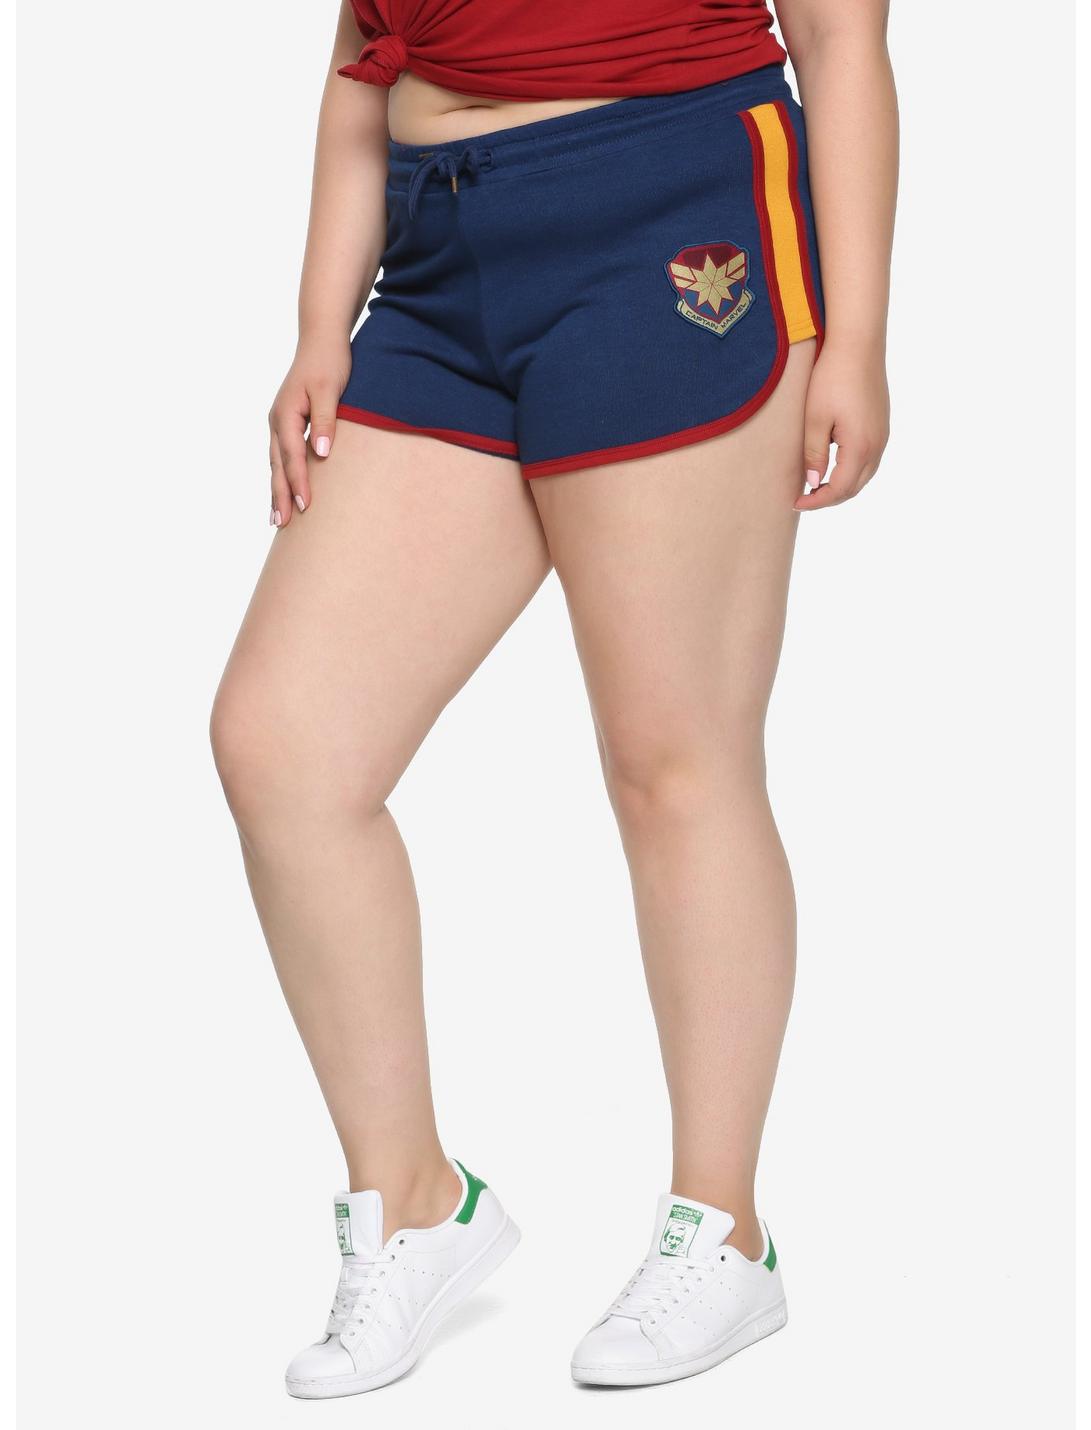 Her Universe Marvel Captain Marvel Girls Soft Shorts Plus Size, NAVY, hi-res